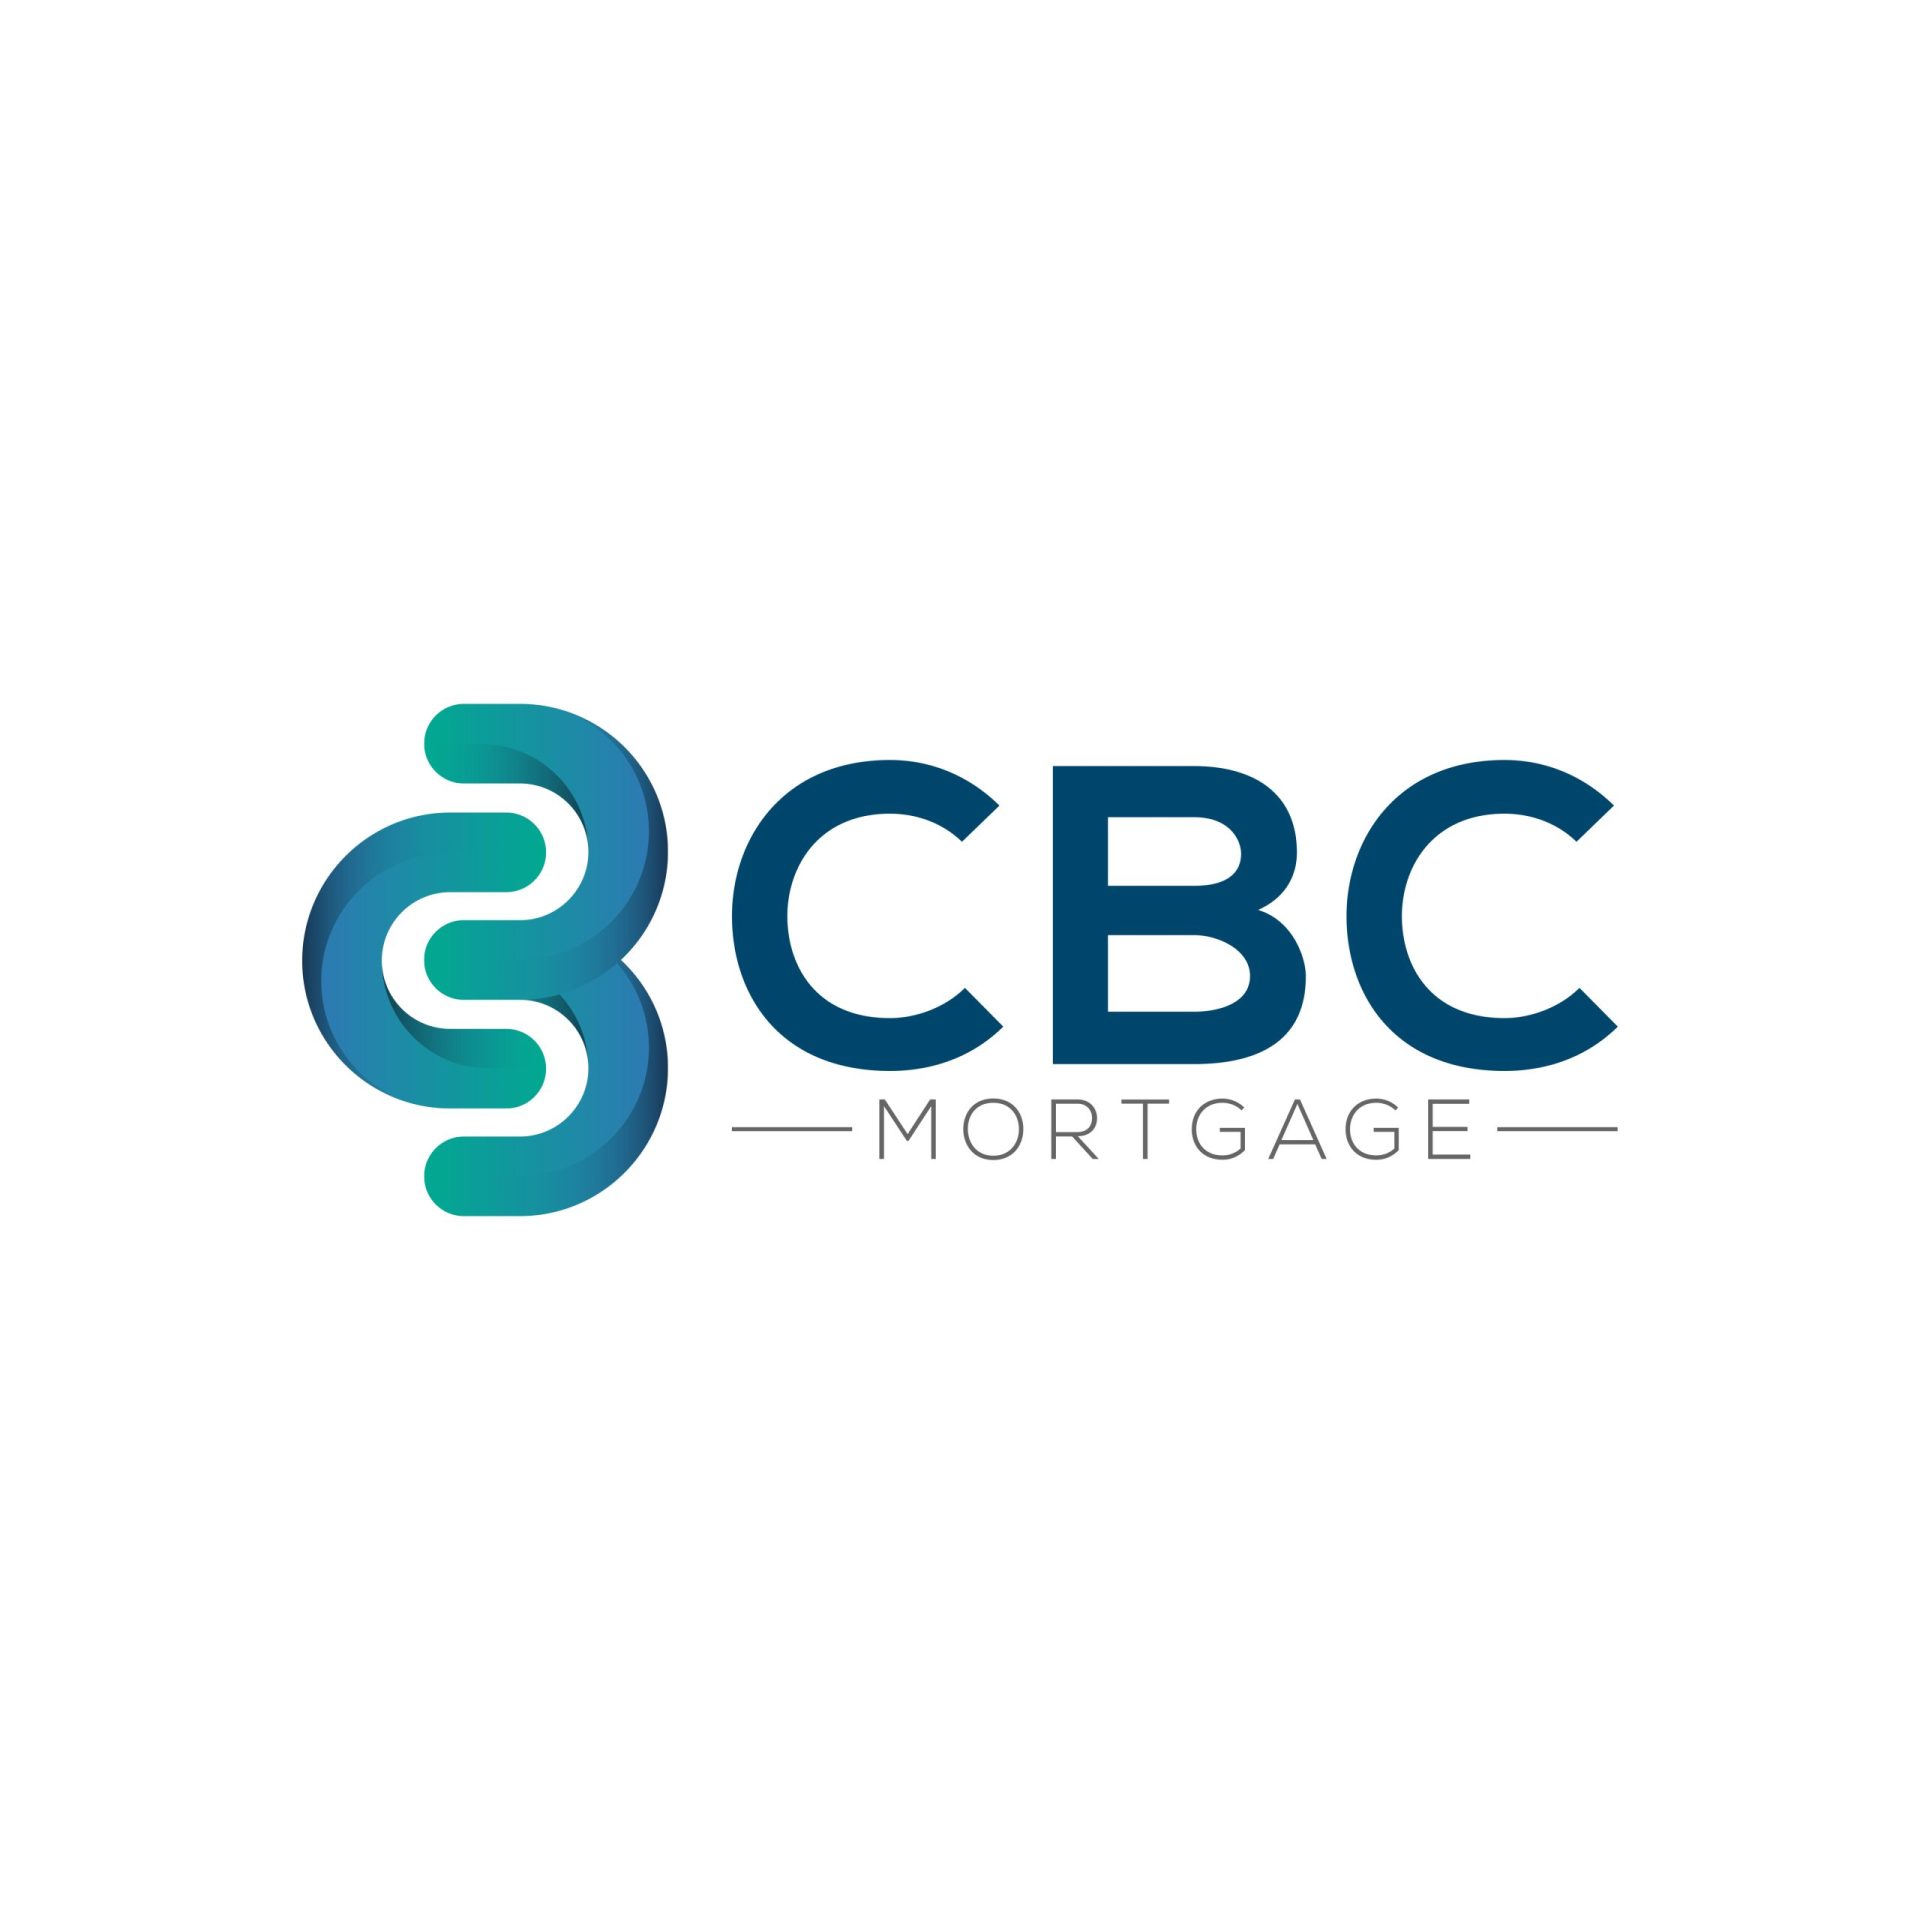 mortgage logo ideas 6